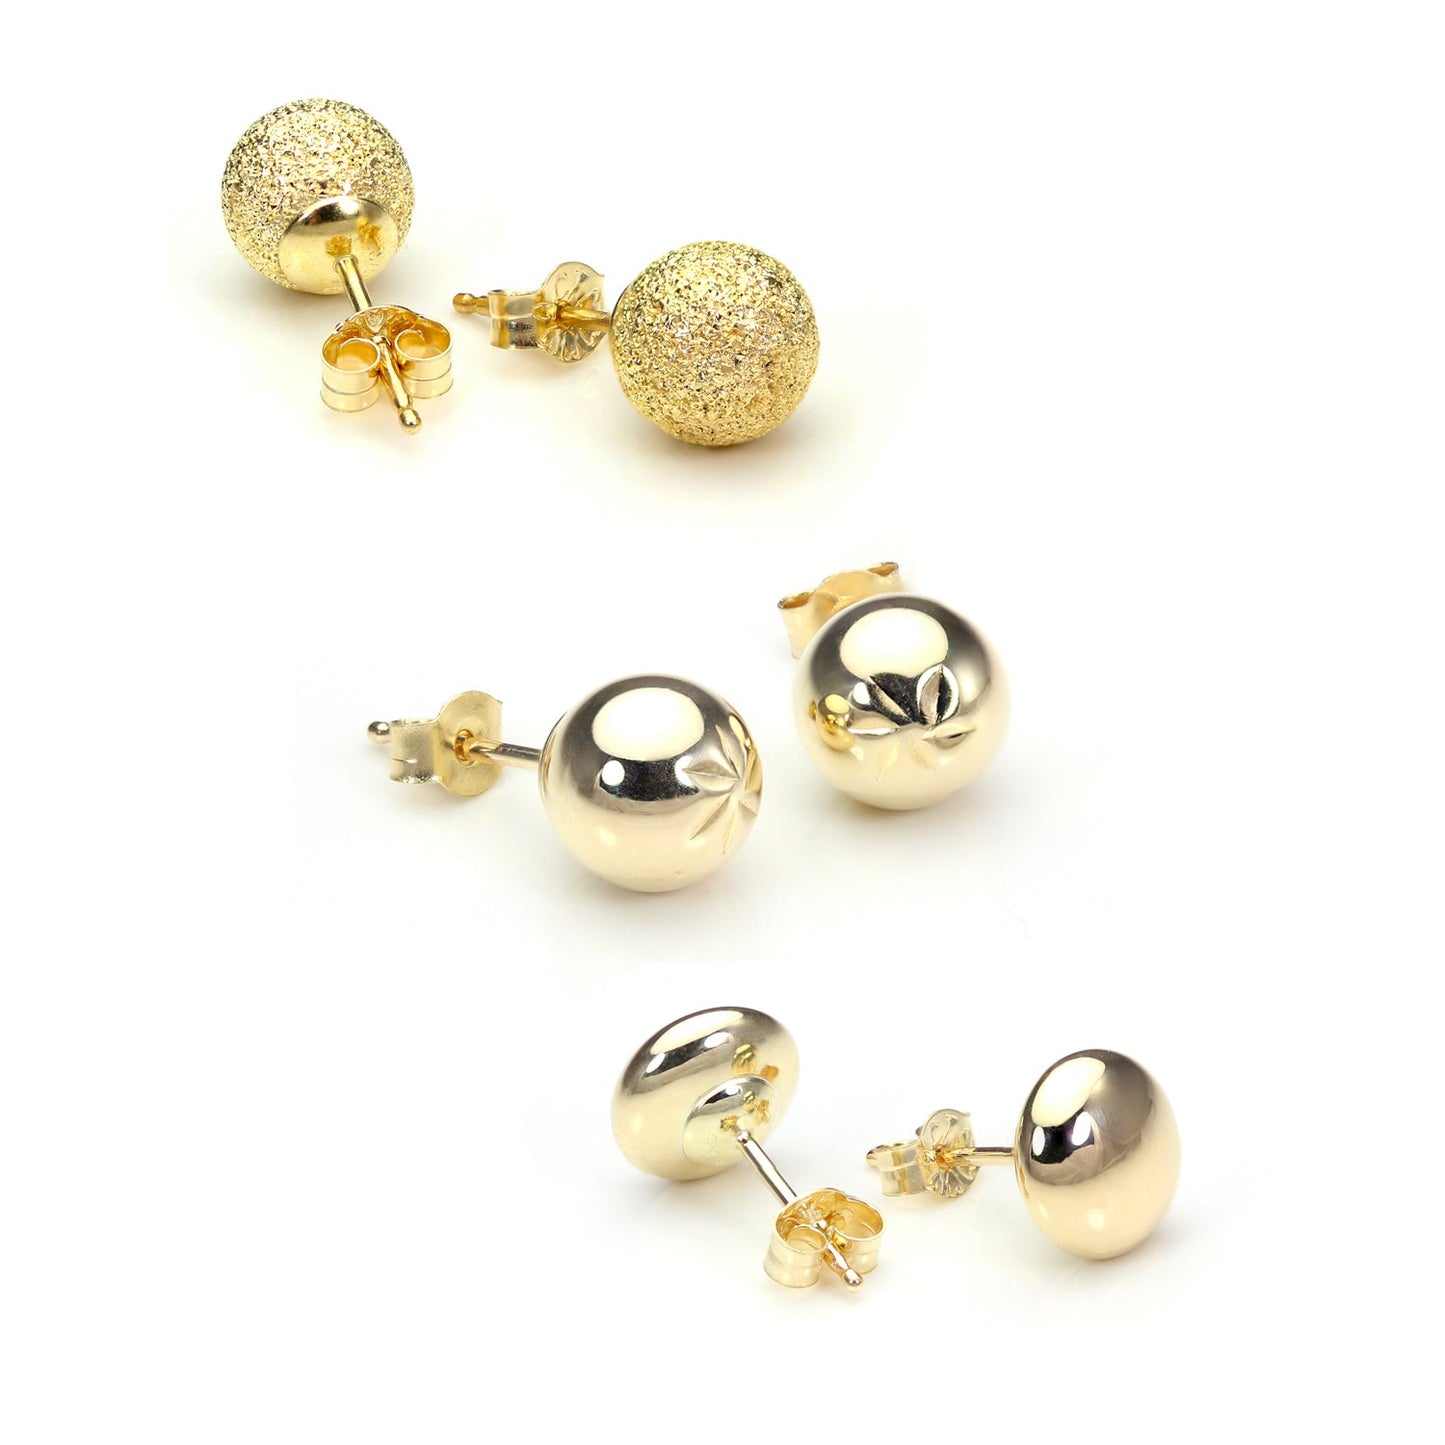 9ct Gold Luxury Ball Stud 6mm Stud Earrings Set